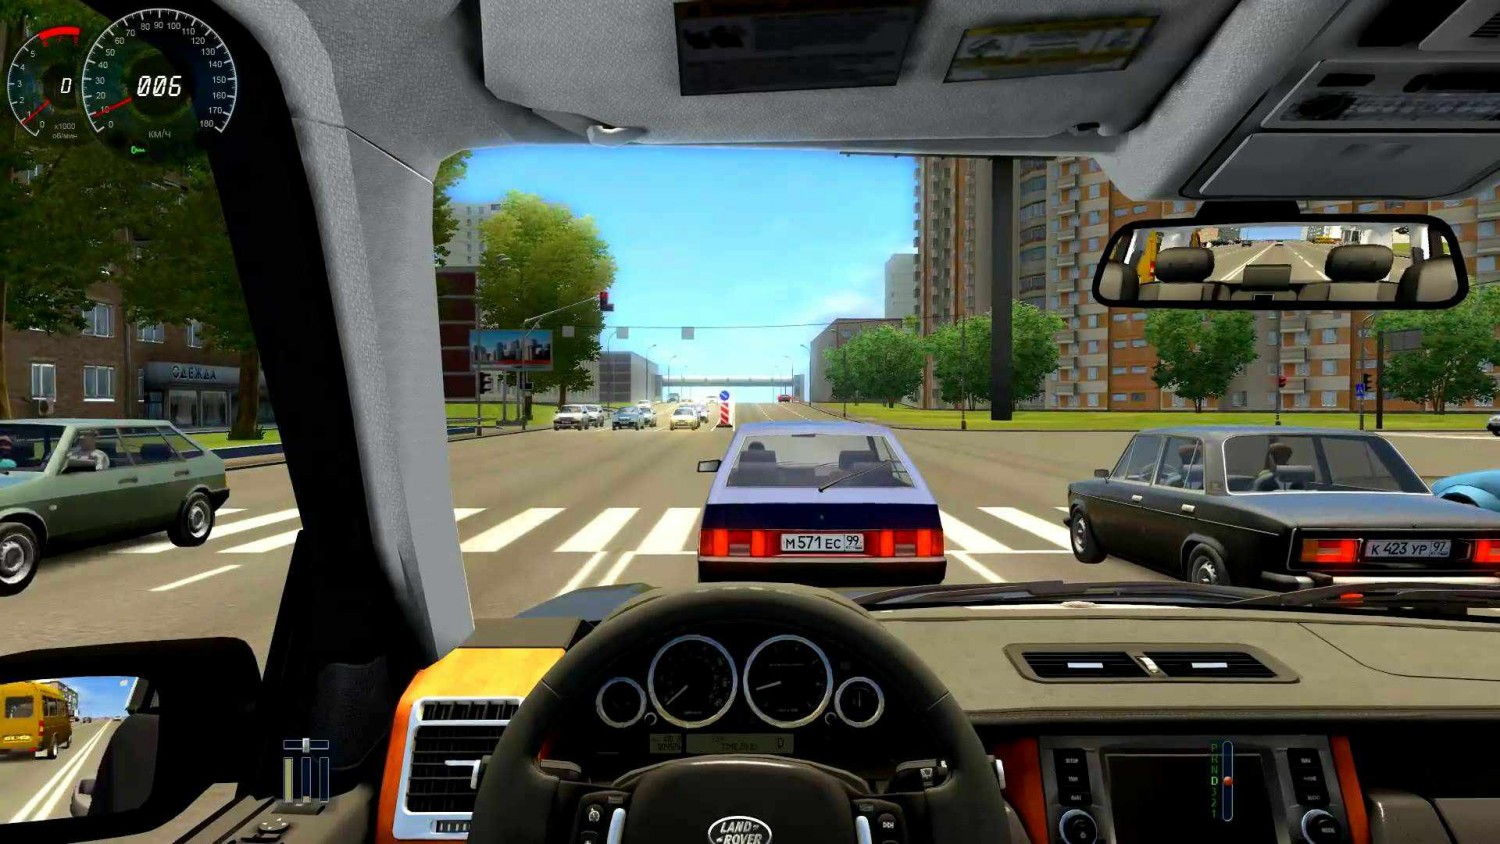 My car игра на пк. City car Driving 3d инструктор. 3д инструктор 2.2.10. City car Driving 2020 ПК игра. Учебный автосимулятор City car Driving 1.5.7.